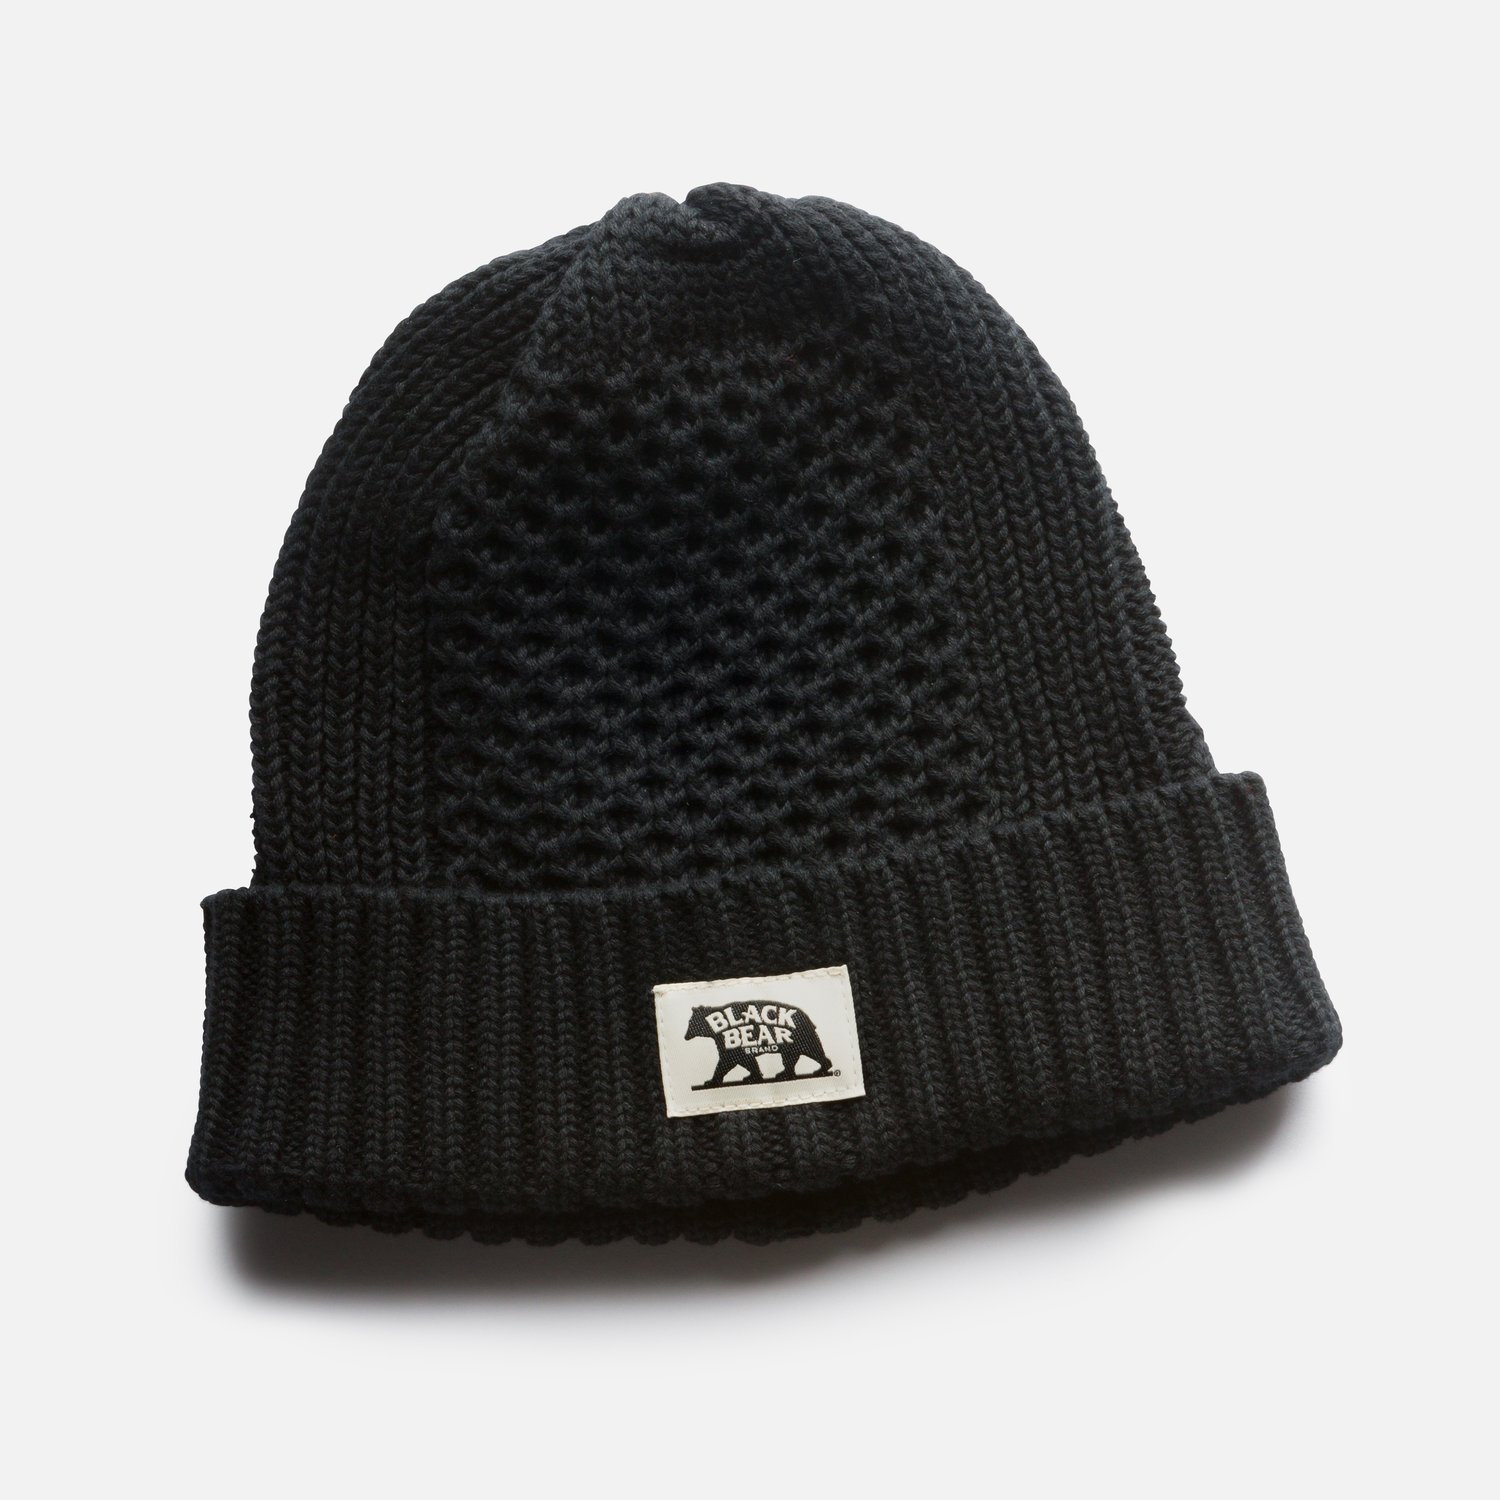 Bear Brand Watch — x Collaboration Knit - Black Cap BLACK Bear Black Cable ROTOTO Brand